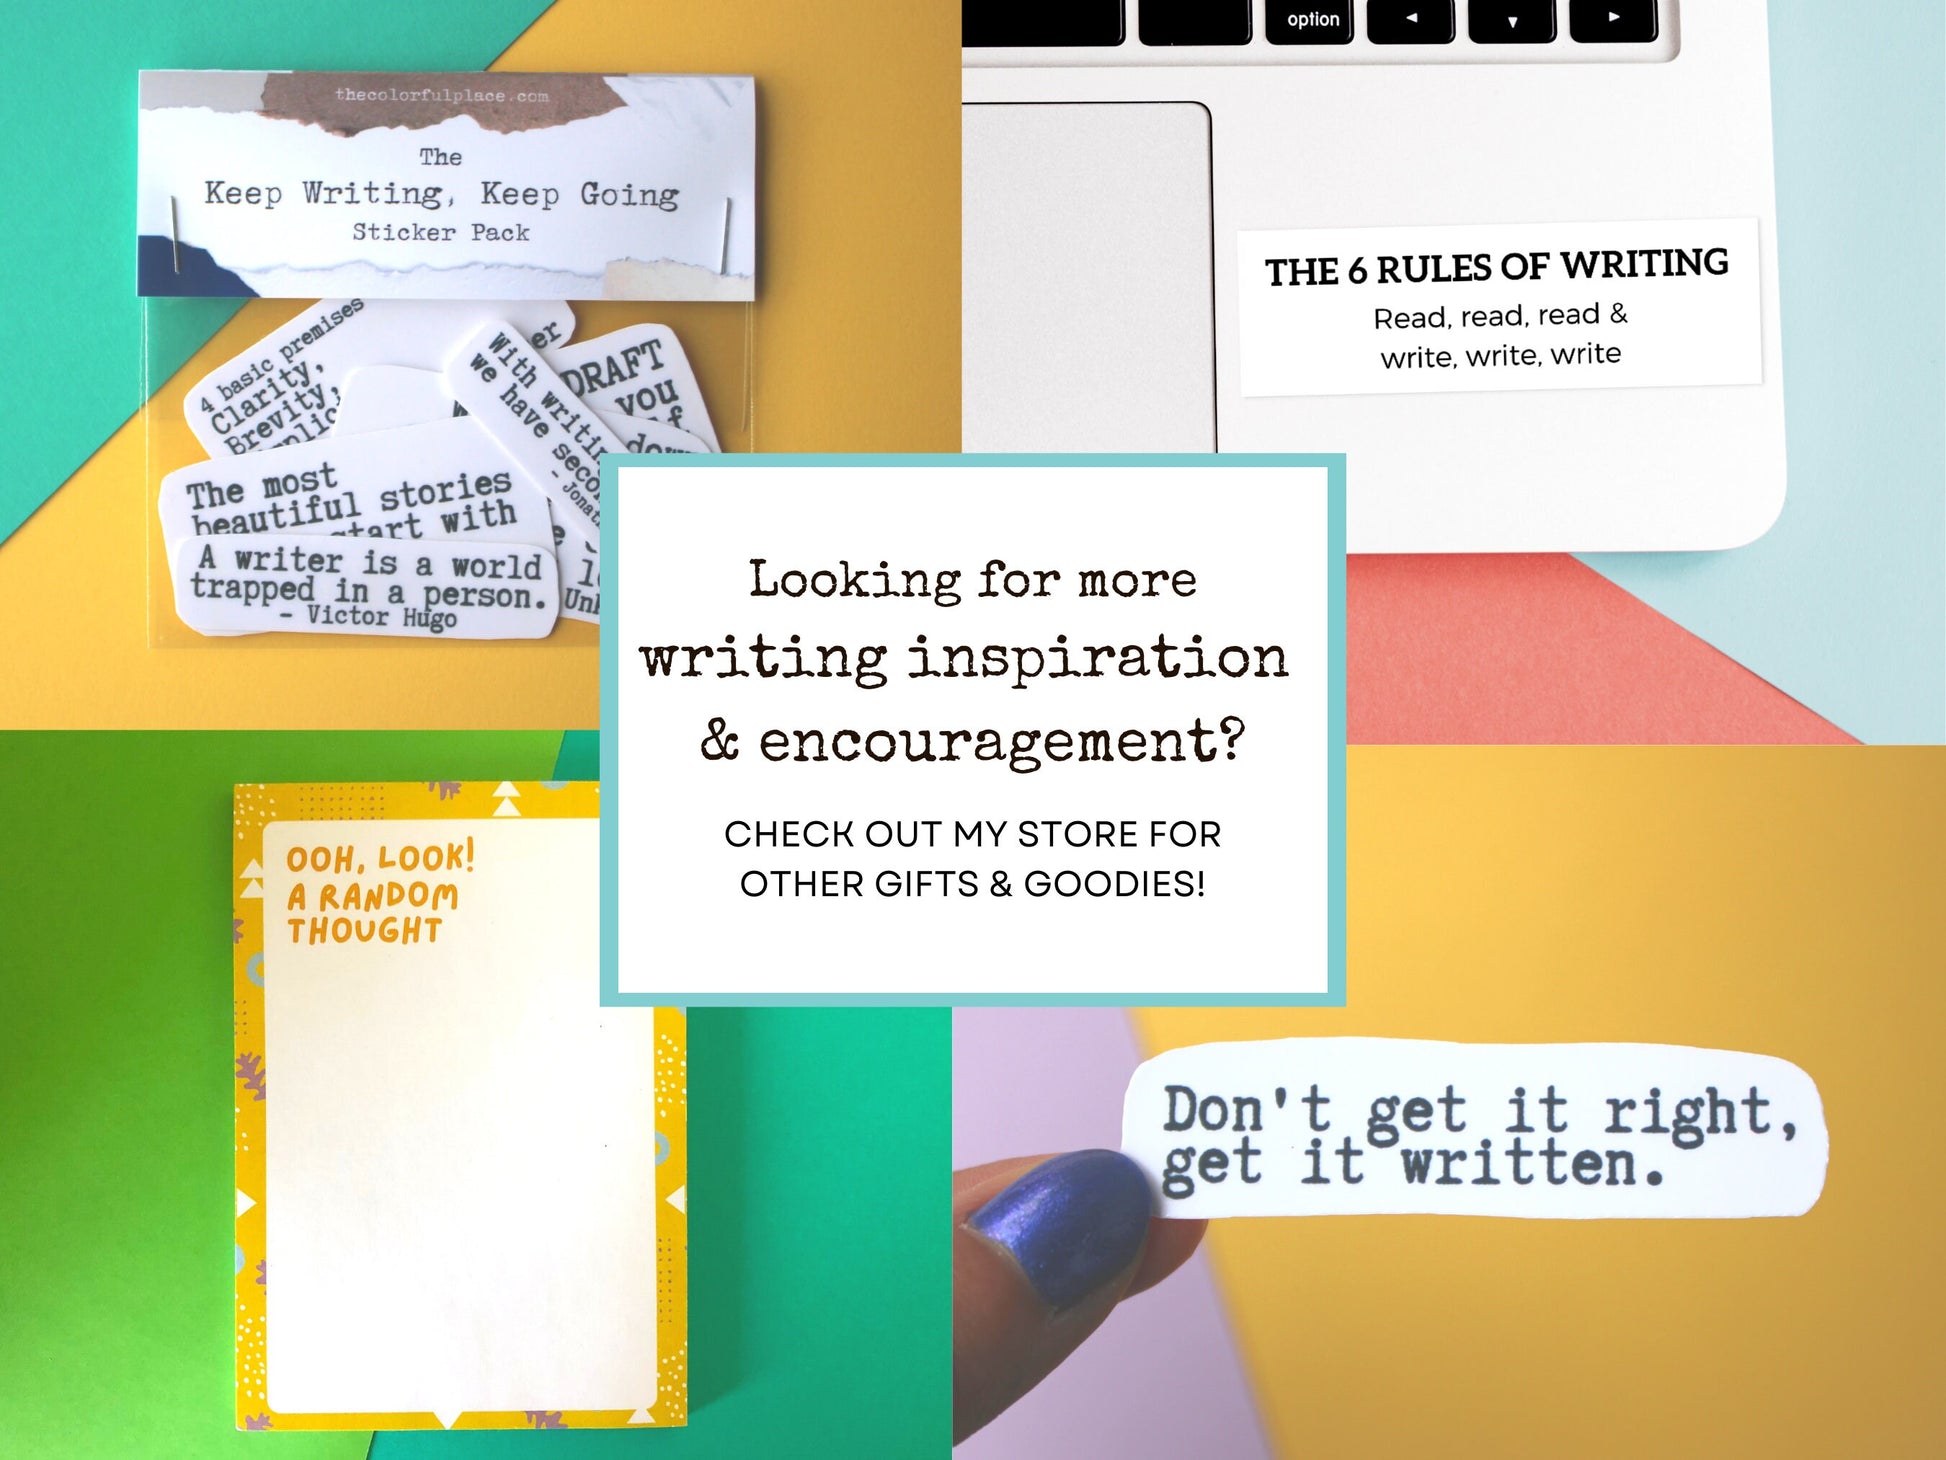 I'm A Writer Sticker | Writer Gifts | Writing Motivation | Writing Laptop Sticker